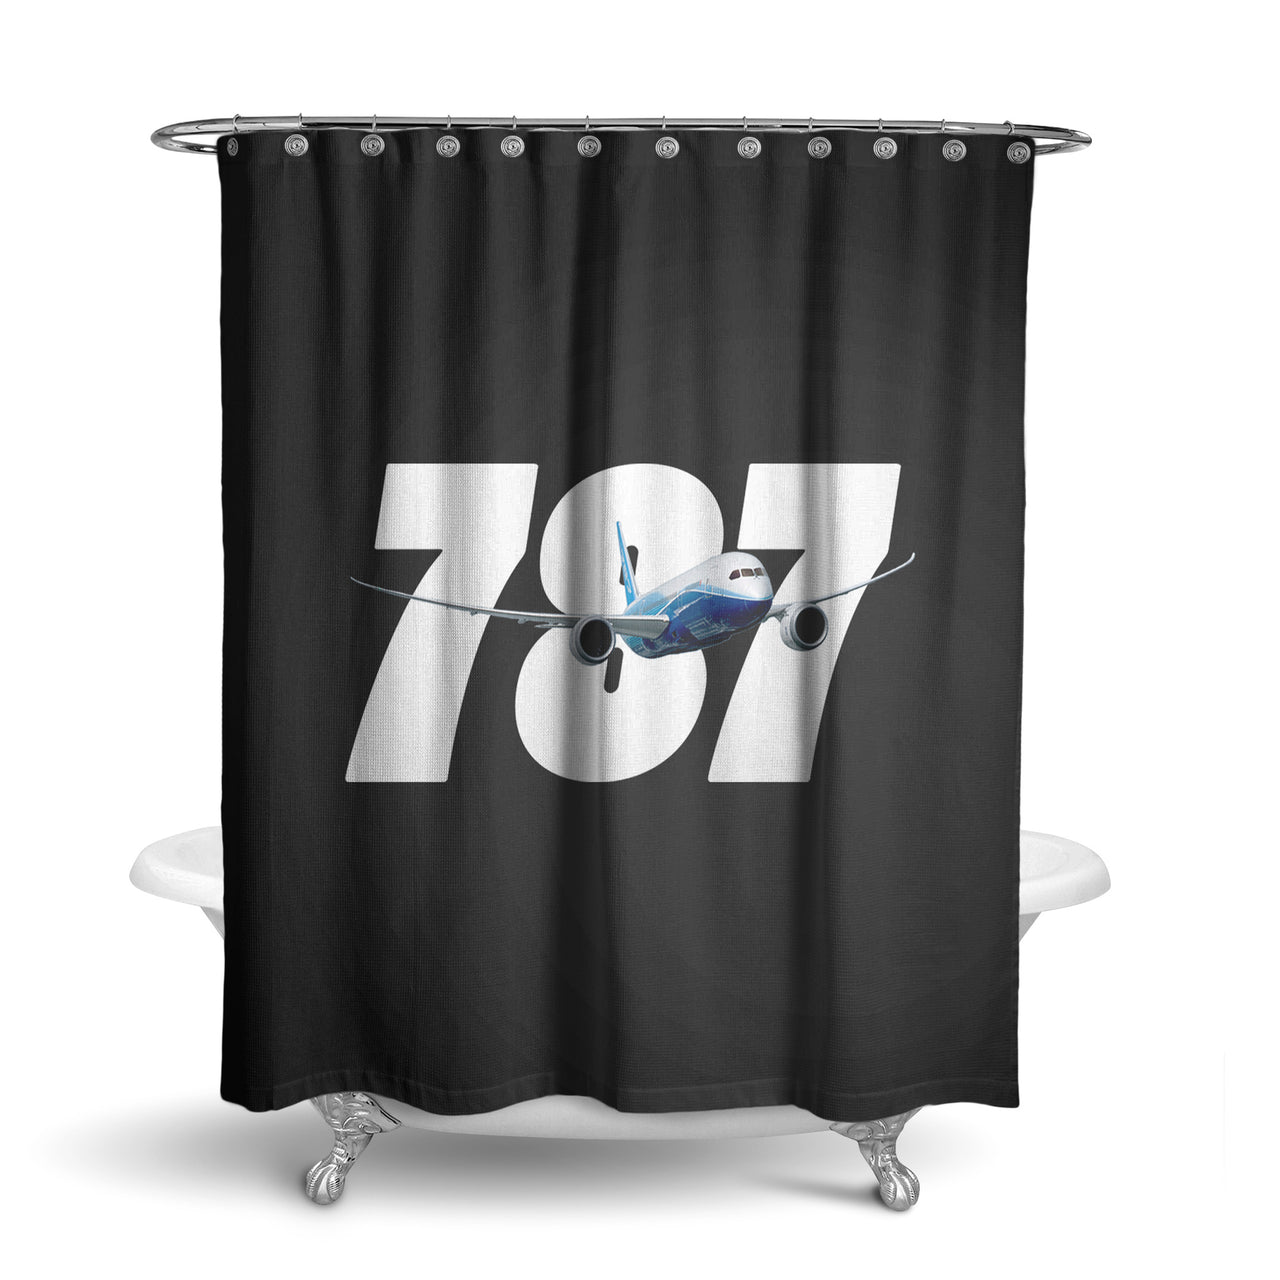 Super Boeing 787 Designed Shower Curtains